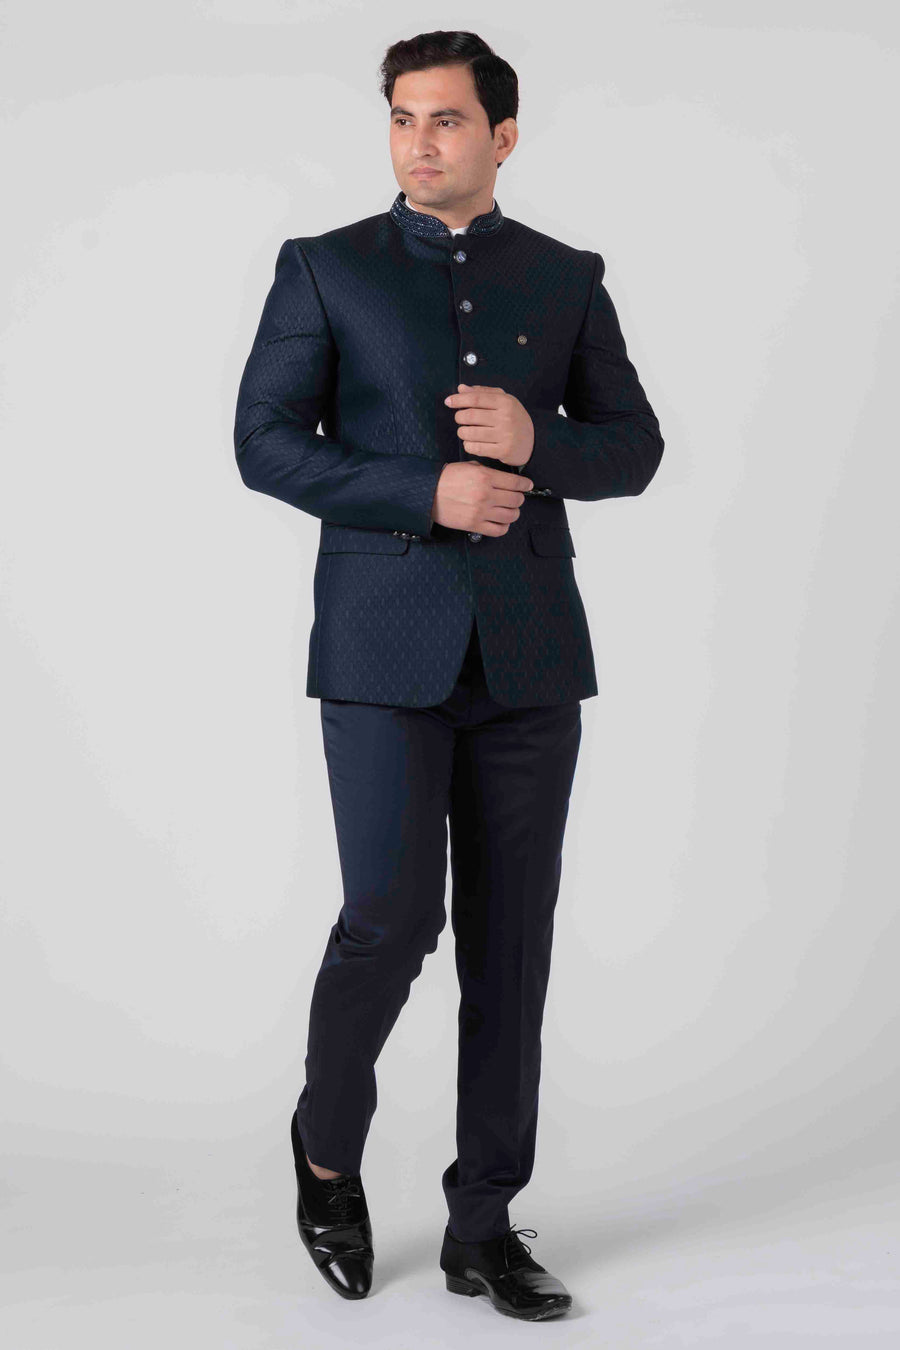 Buy Madhuman Custom Navy Blue Jodhpuri for Men, Indian Wedding Suit for  Men, Tradional Outfit for Indian Weddings, Bandhgala Suit for Men Online in  India - Etsy